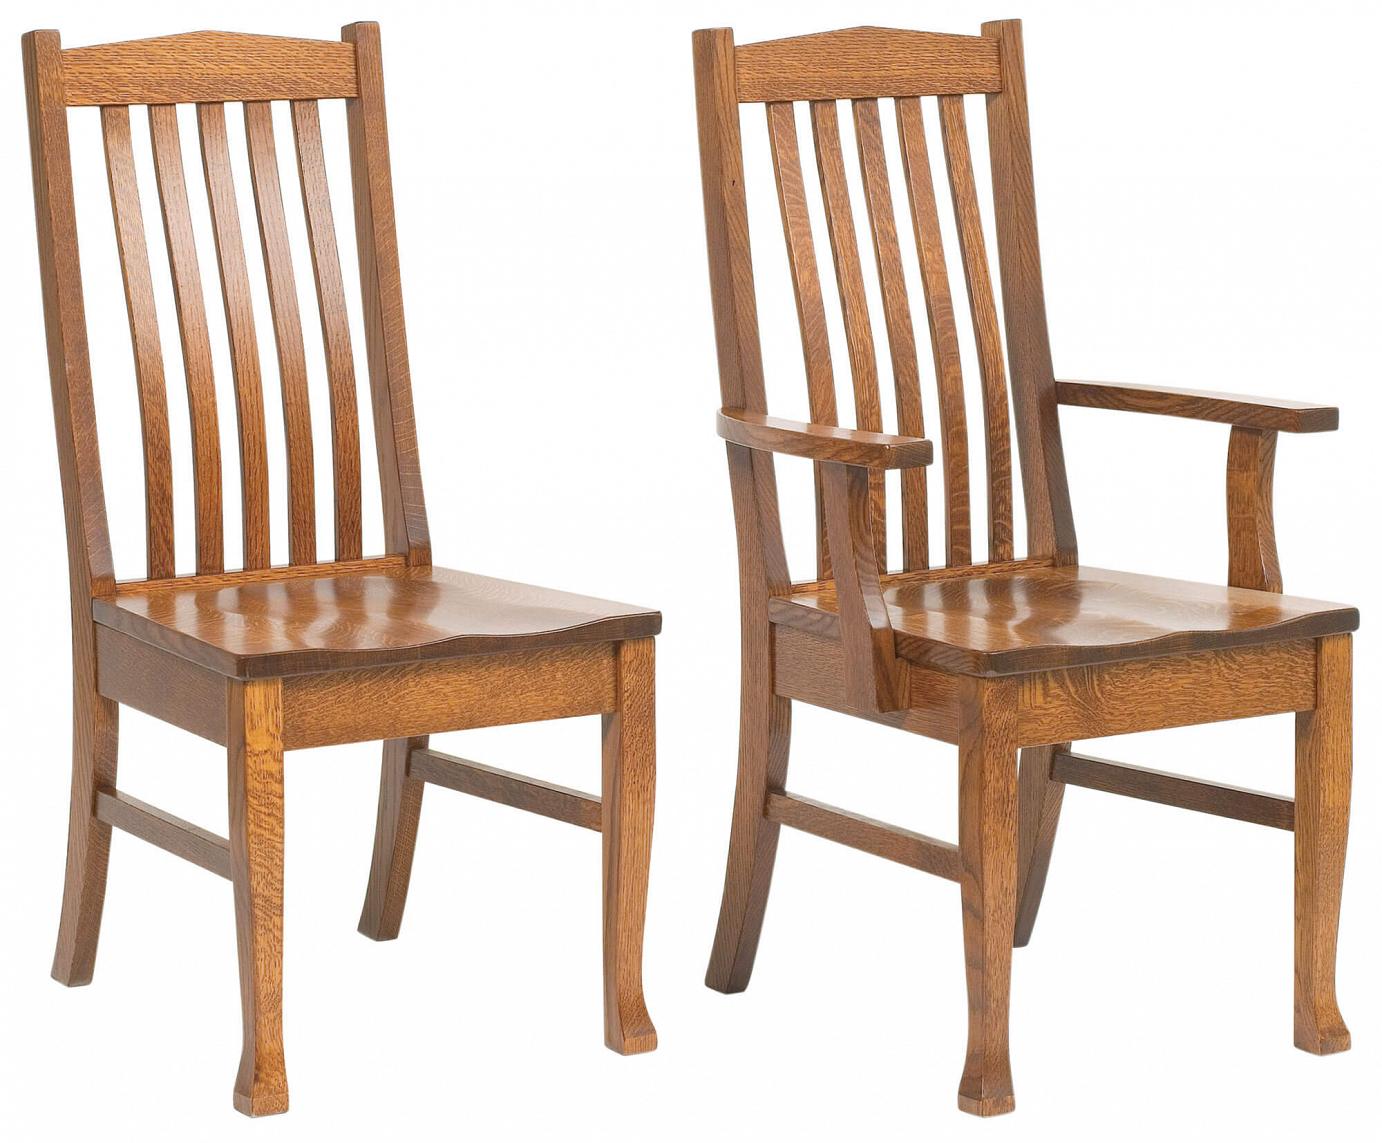 RH Yoder Heritage Chairs